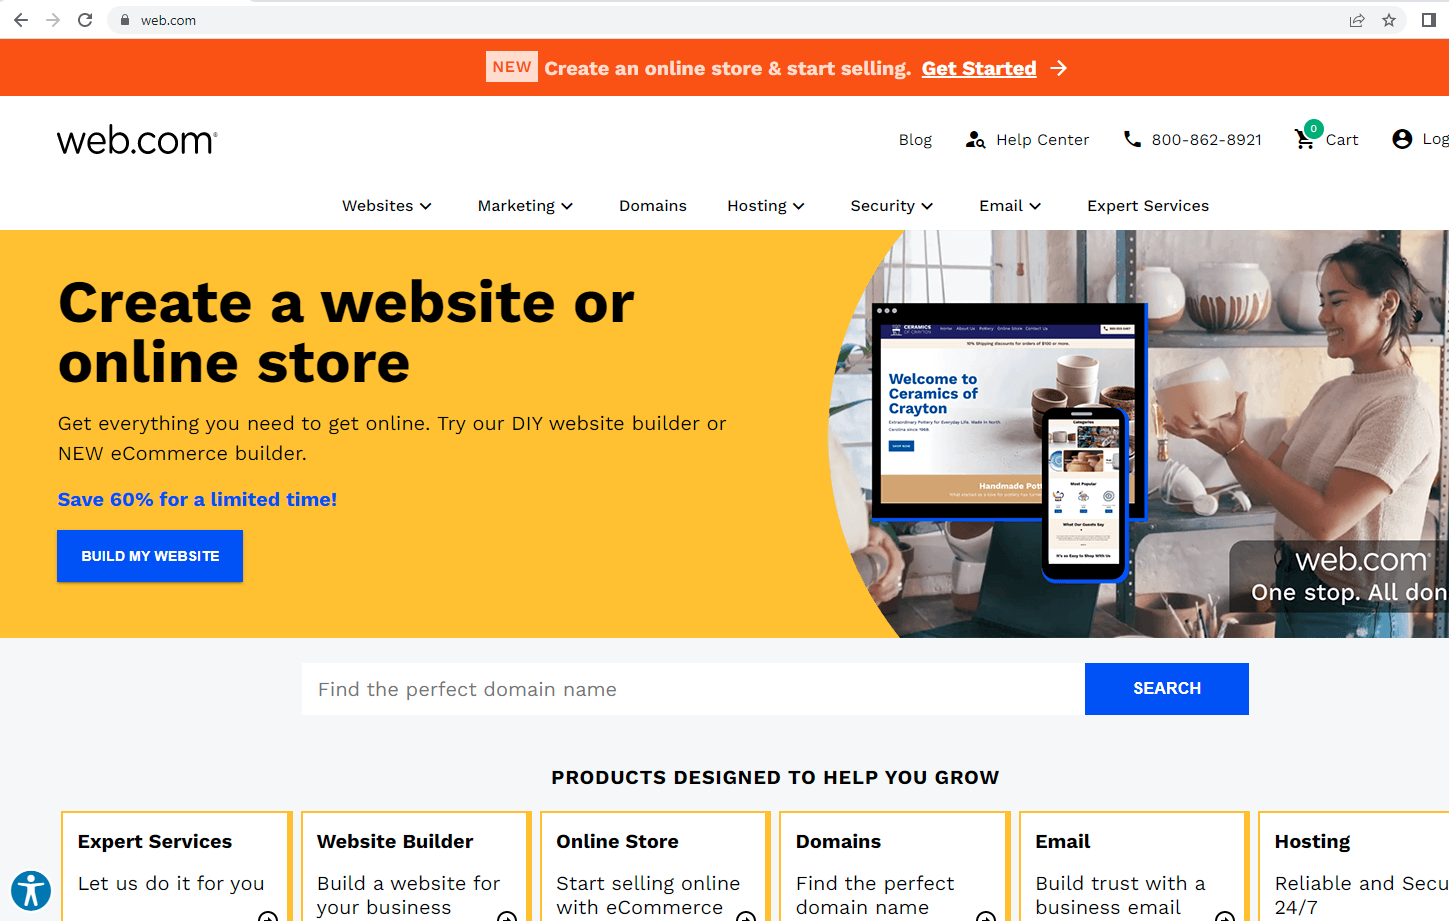 web.com home page screenshot